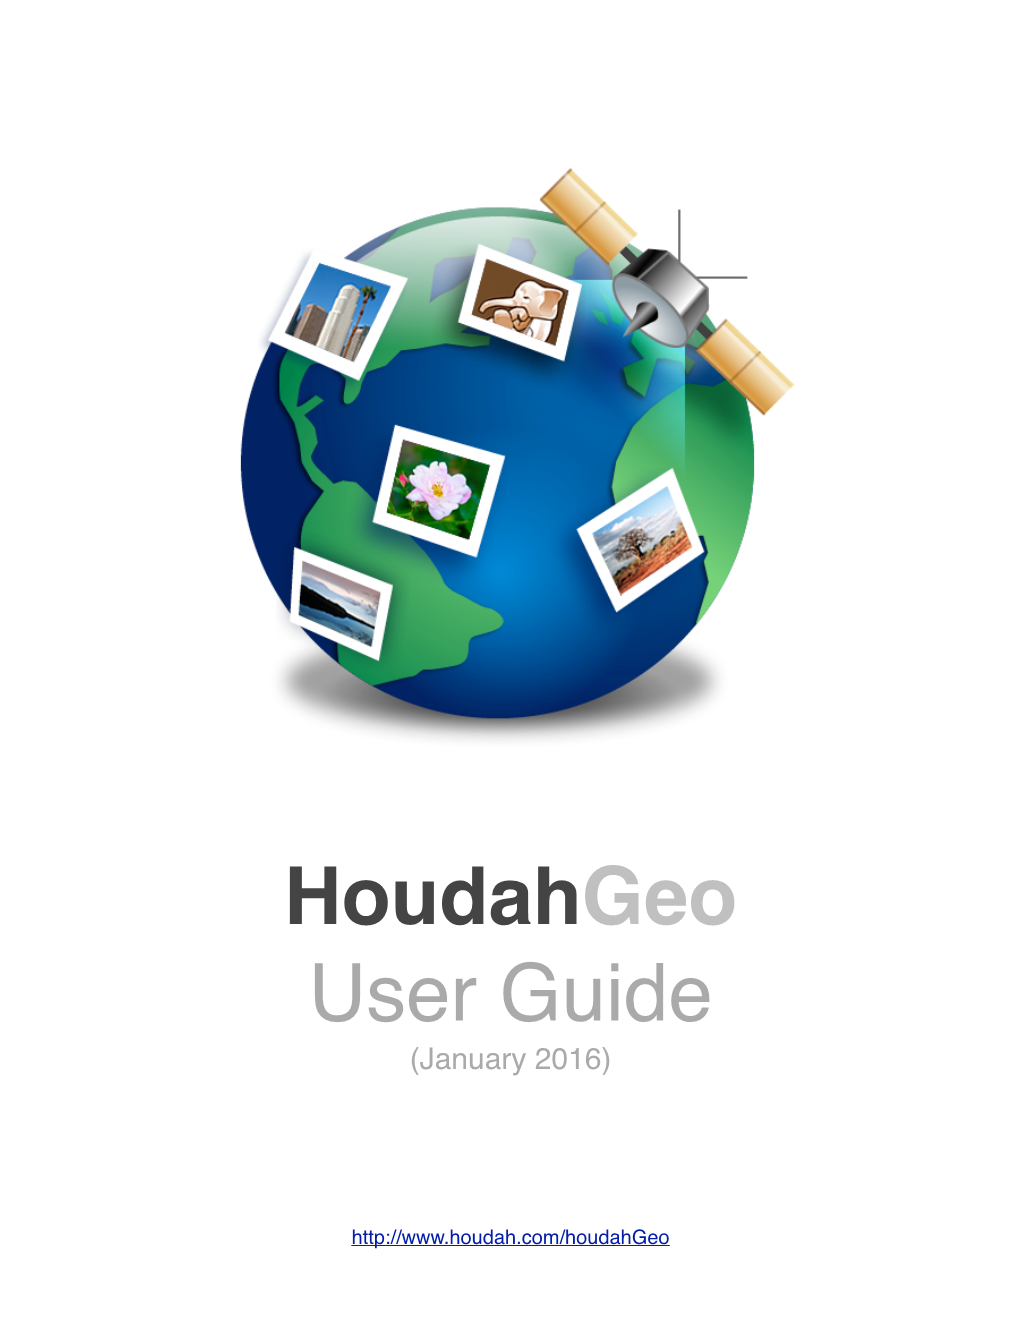 Houdahgeo User Guide (January 2016)